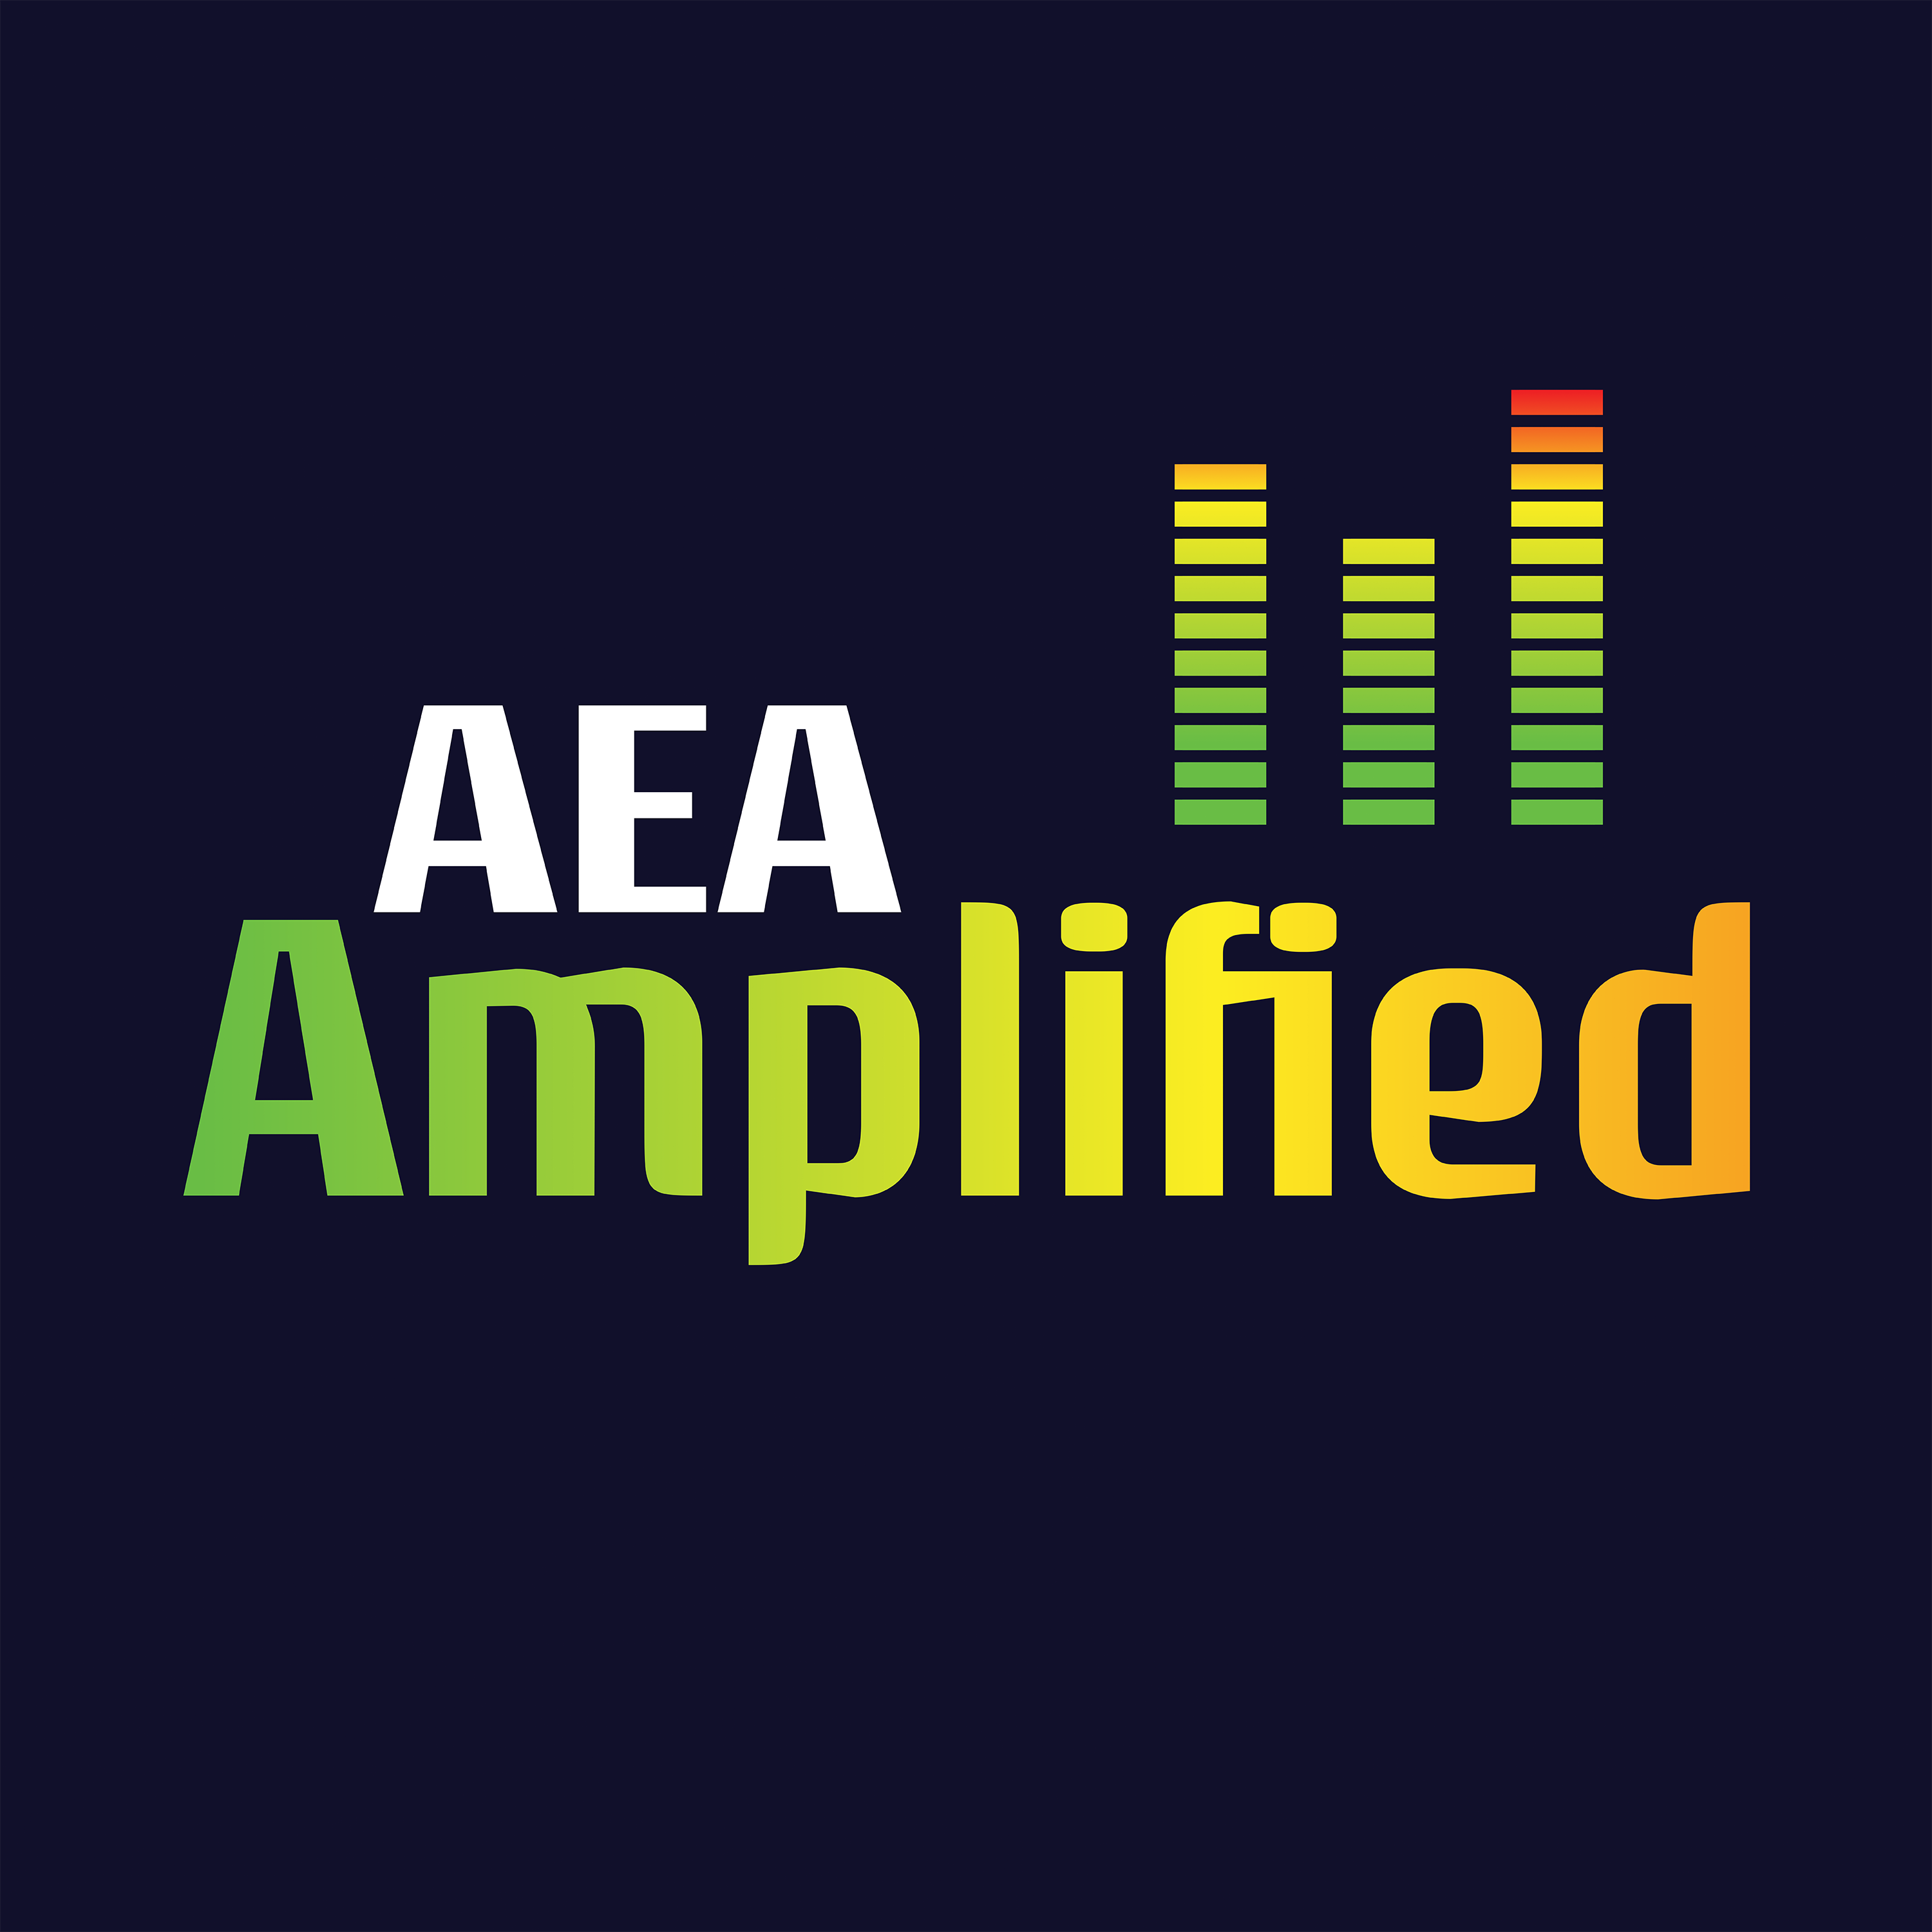 AEA Amplified